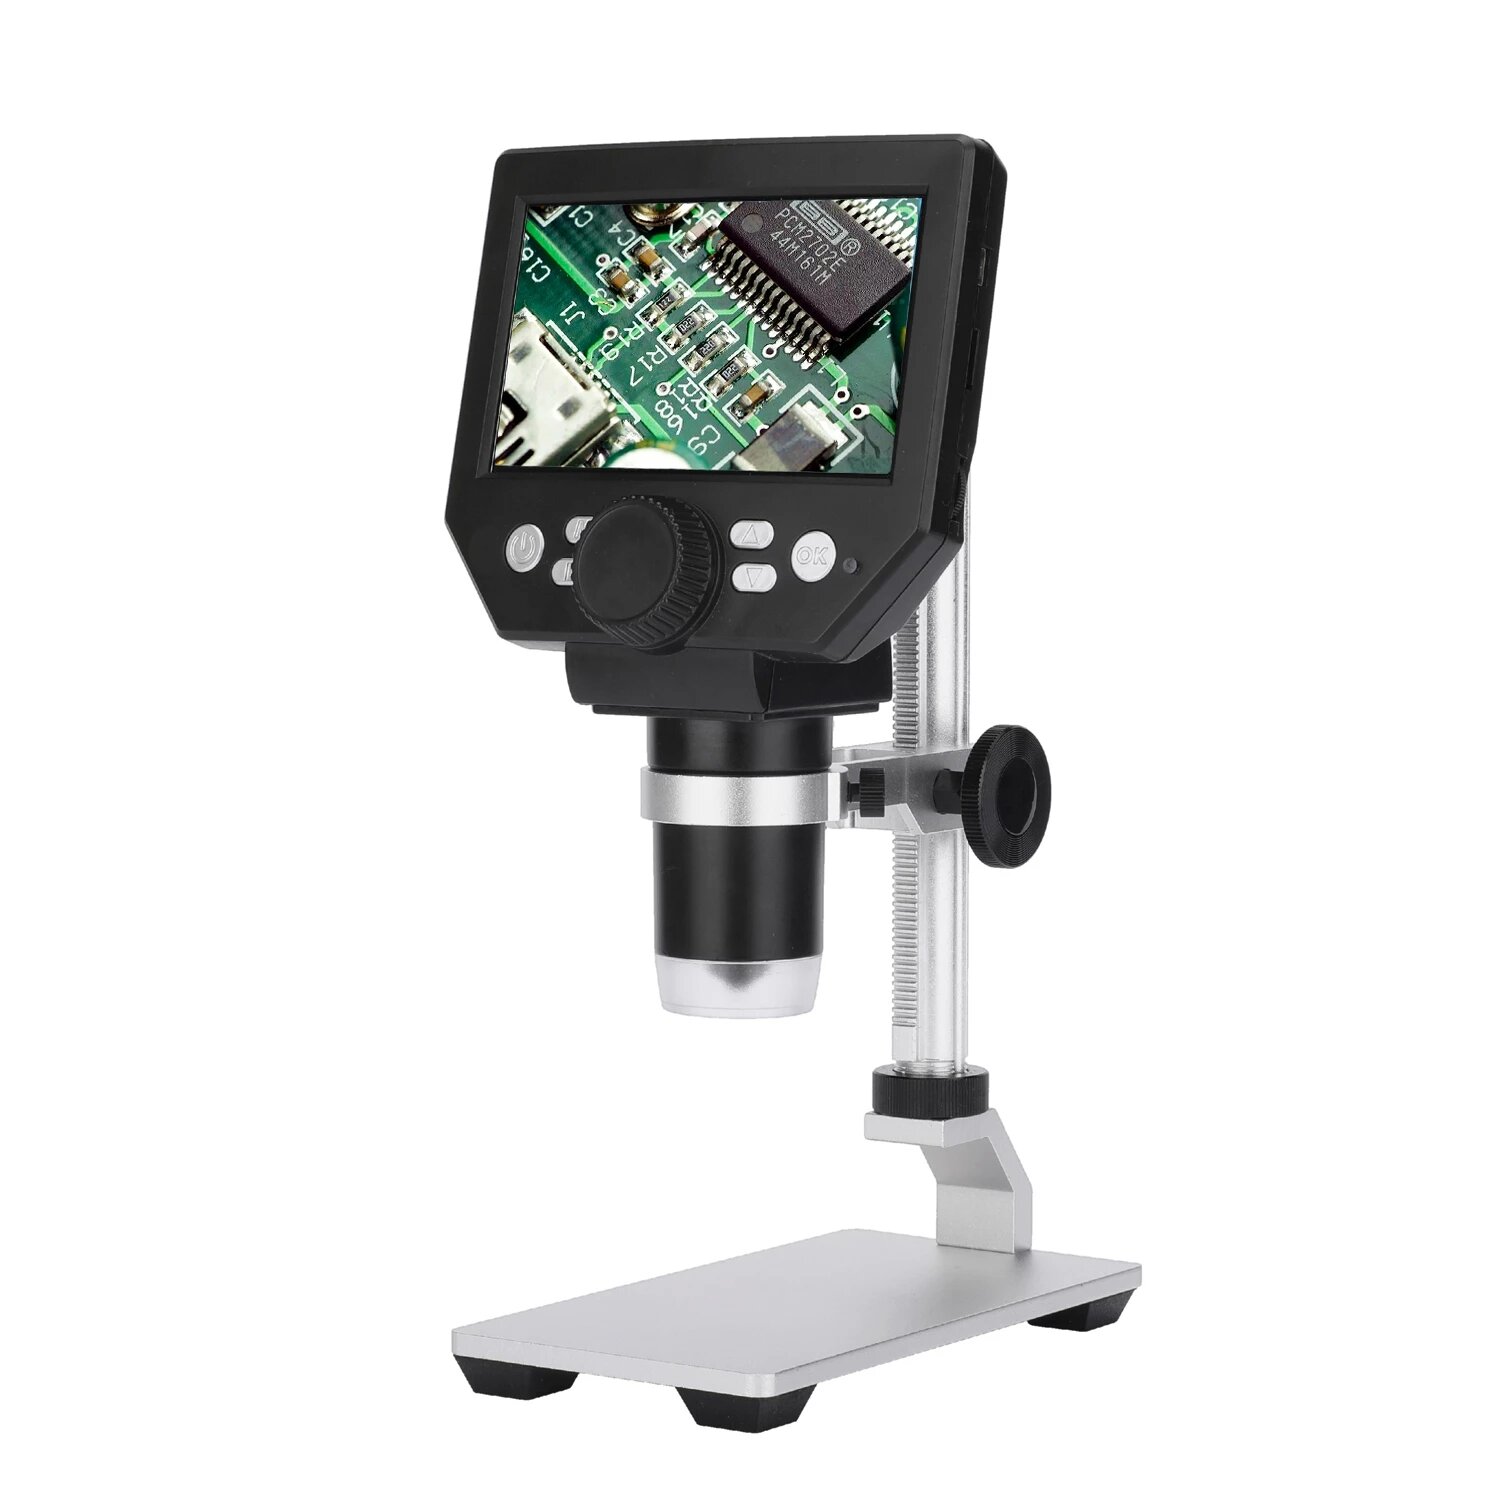 MUSTOOL G1000 Portable 1-1000X HD 8MP Digital Microscope 4.3" Electronic HD Video Microscopes Borescope Magnifier Camera Mobile Phone Repair Microscope